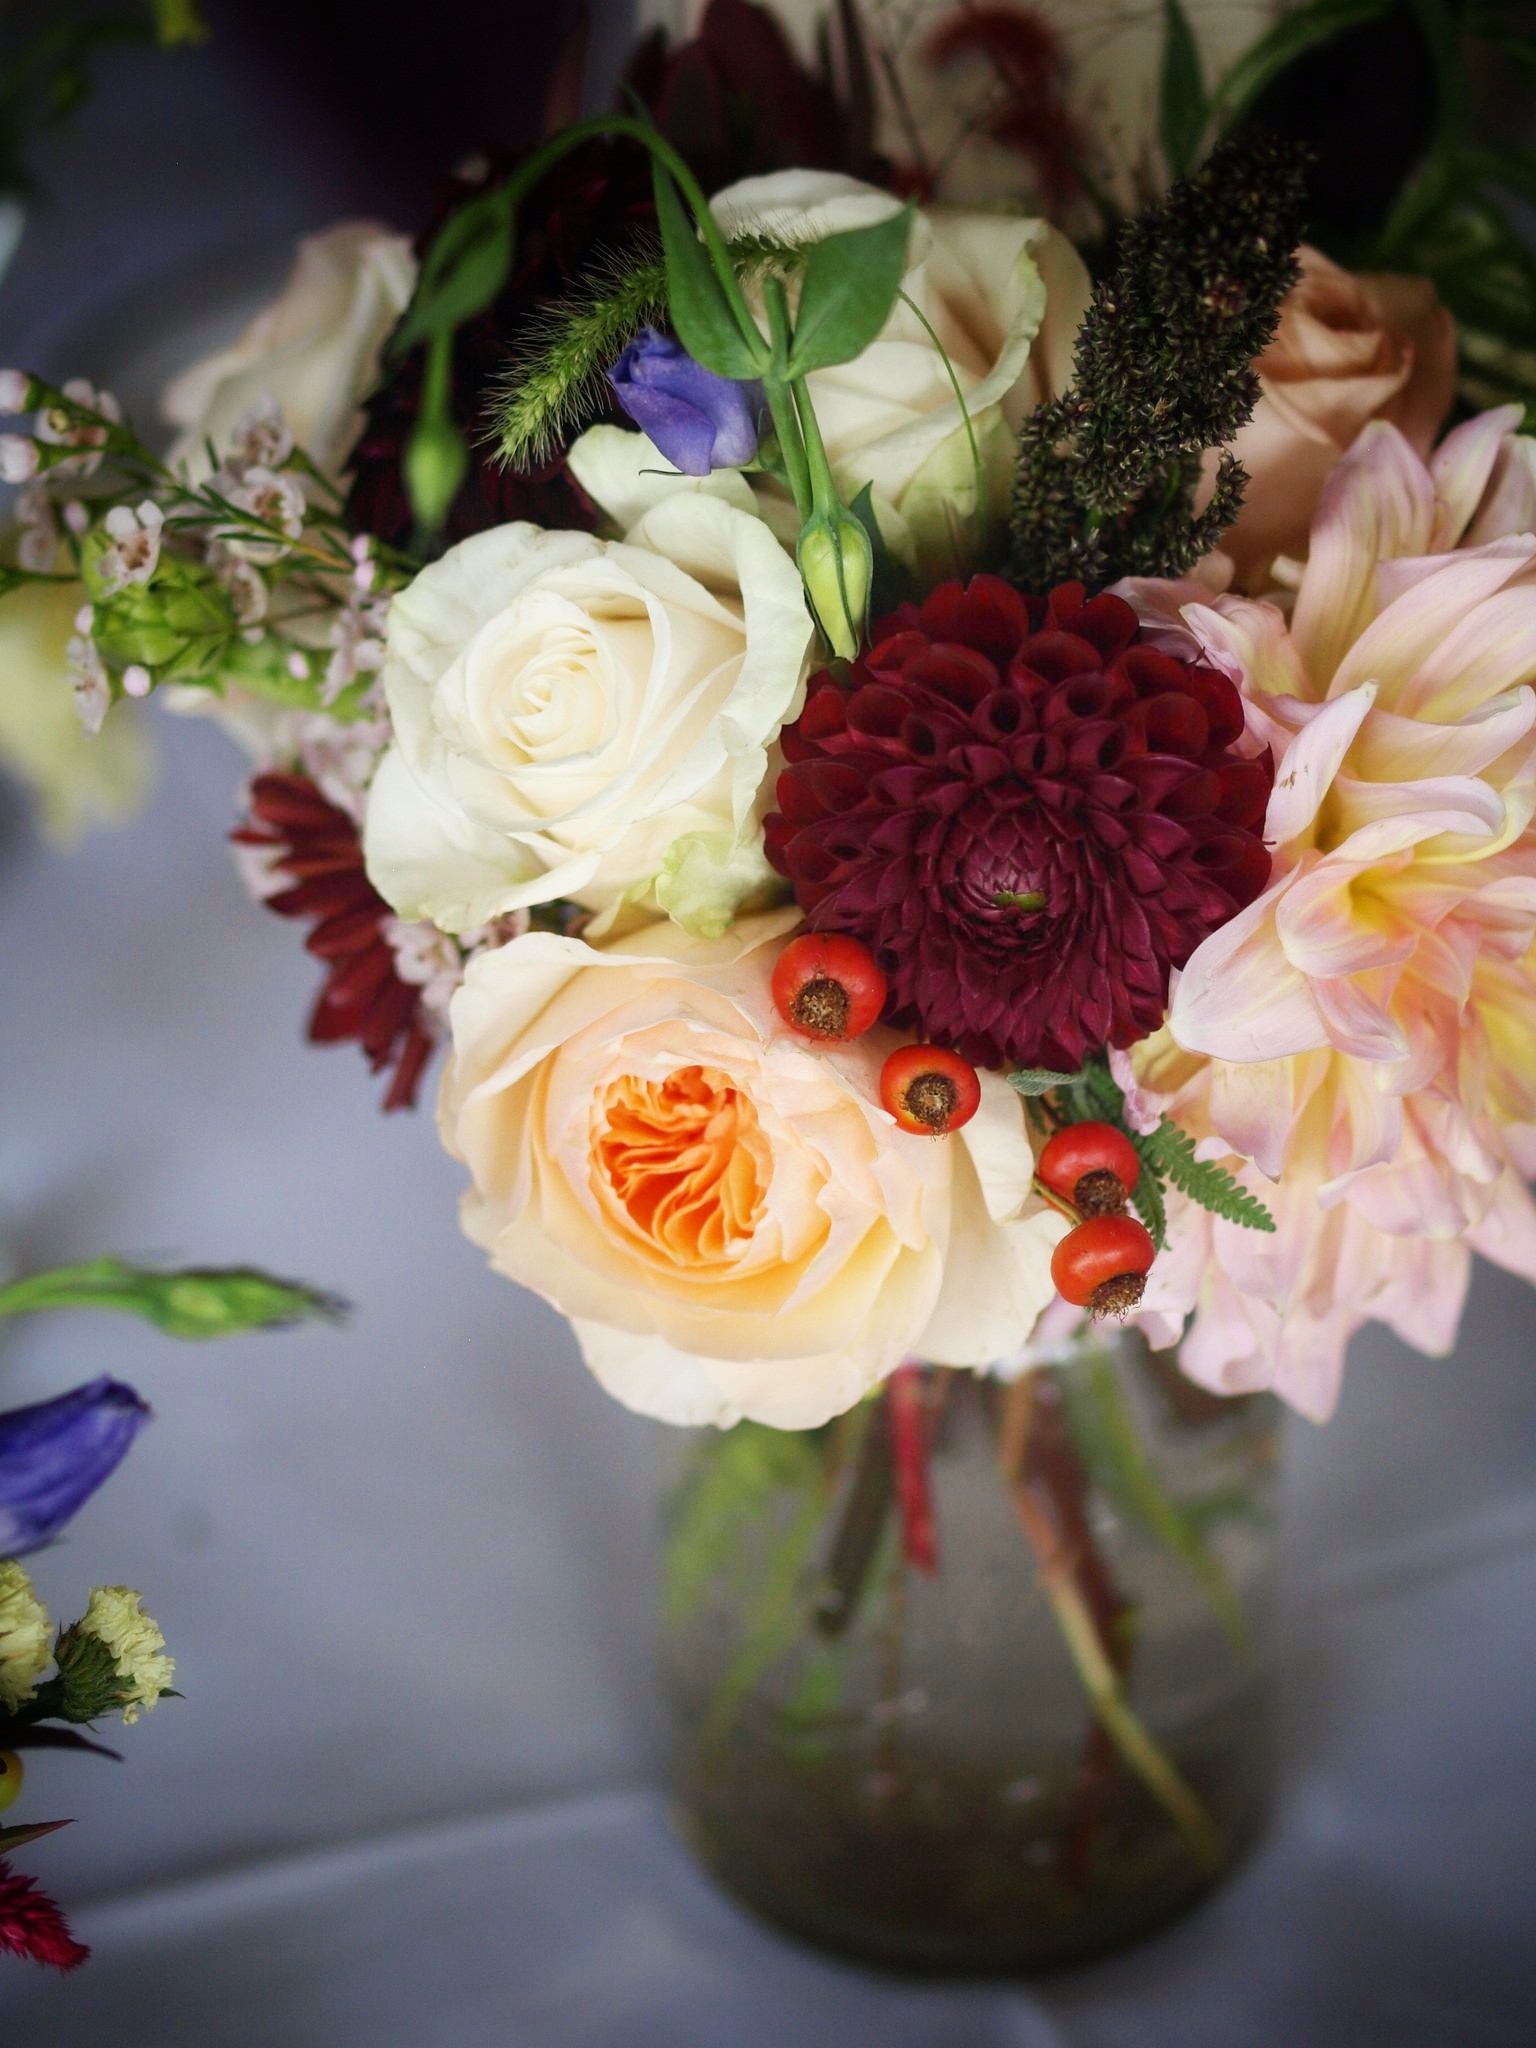 Oreonta house woodstock wedding mason jar centerpiece with garden rose dahlia and wildflowers.jpg